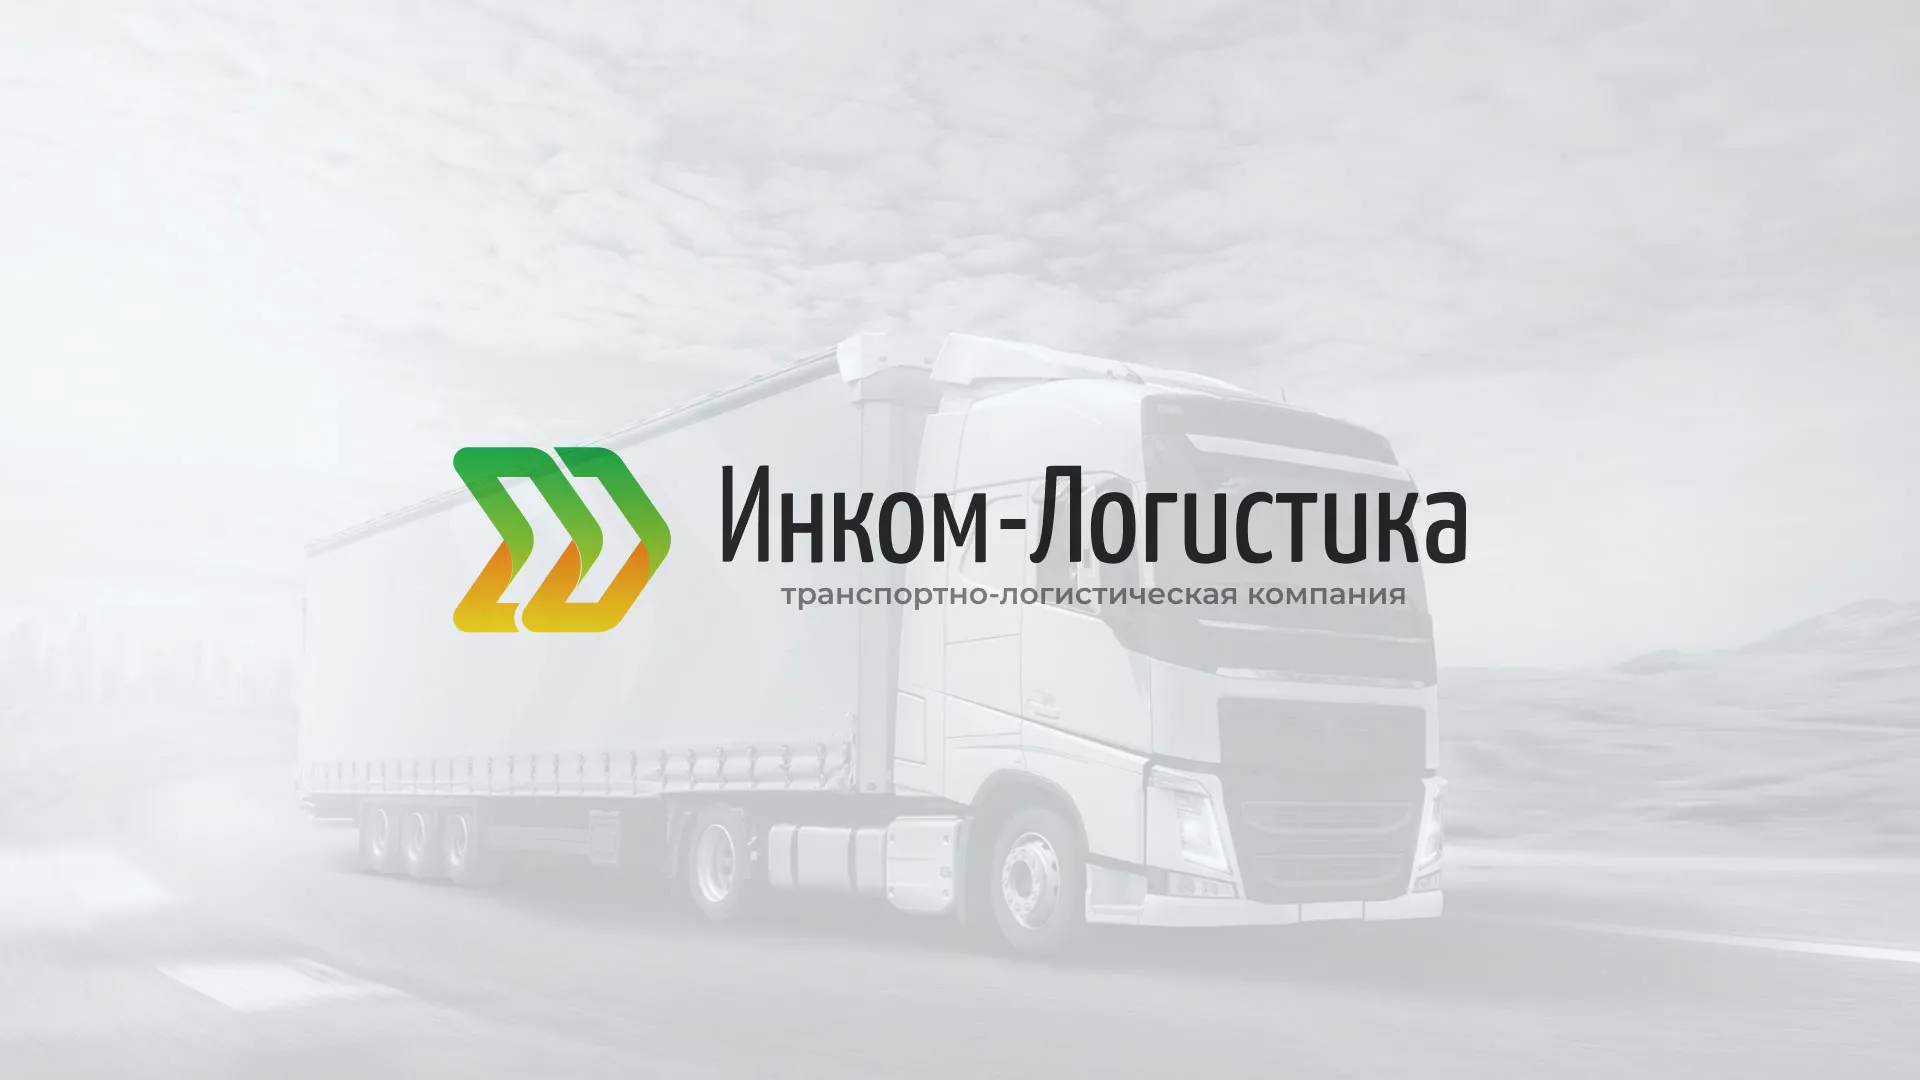 Разработка логотипа и сайта компании «Инком-Логистика» в Ялте